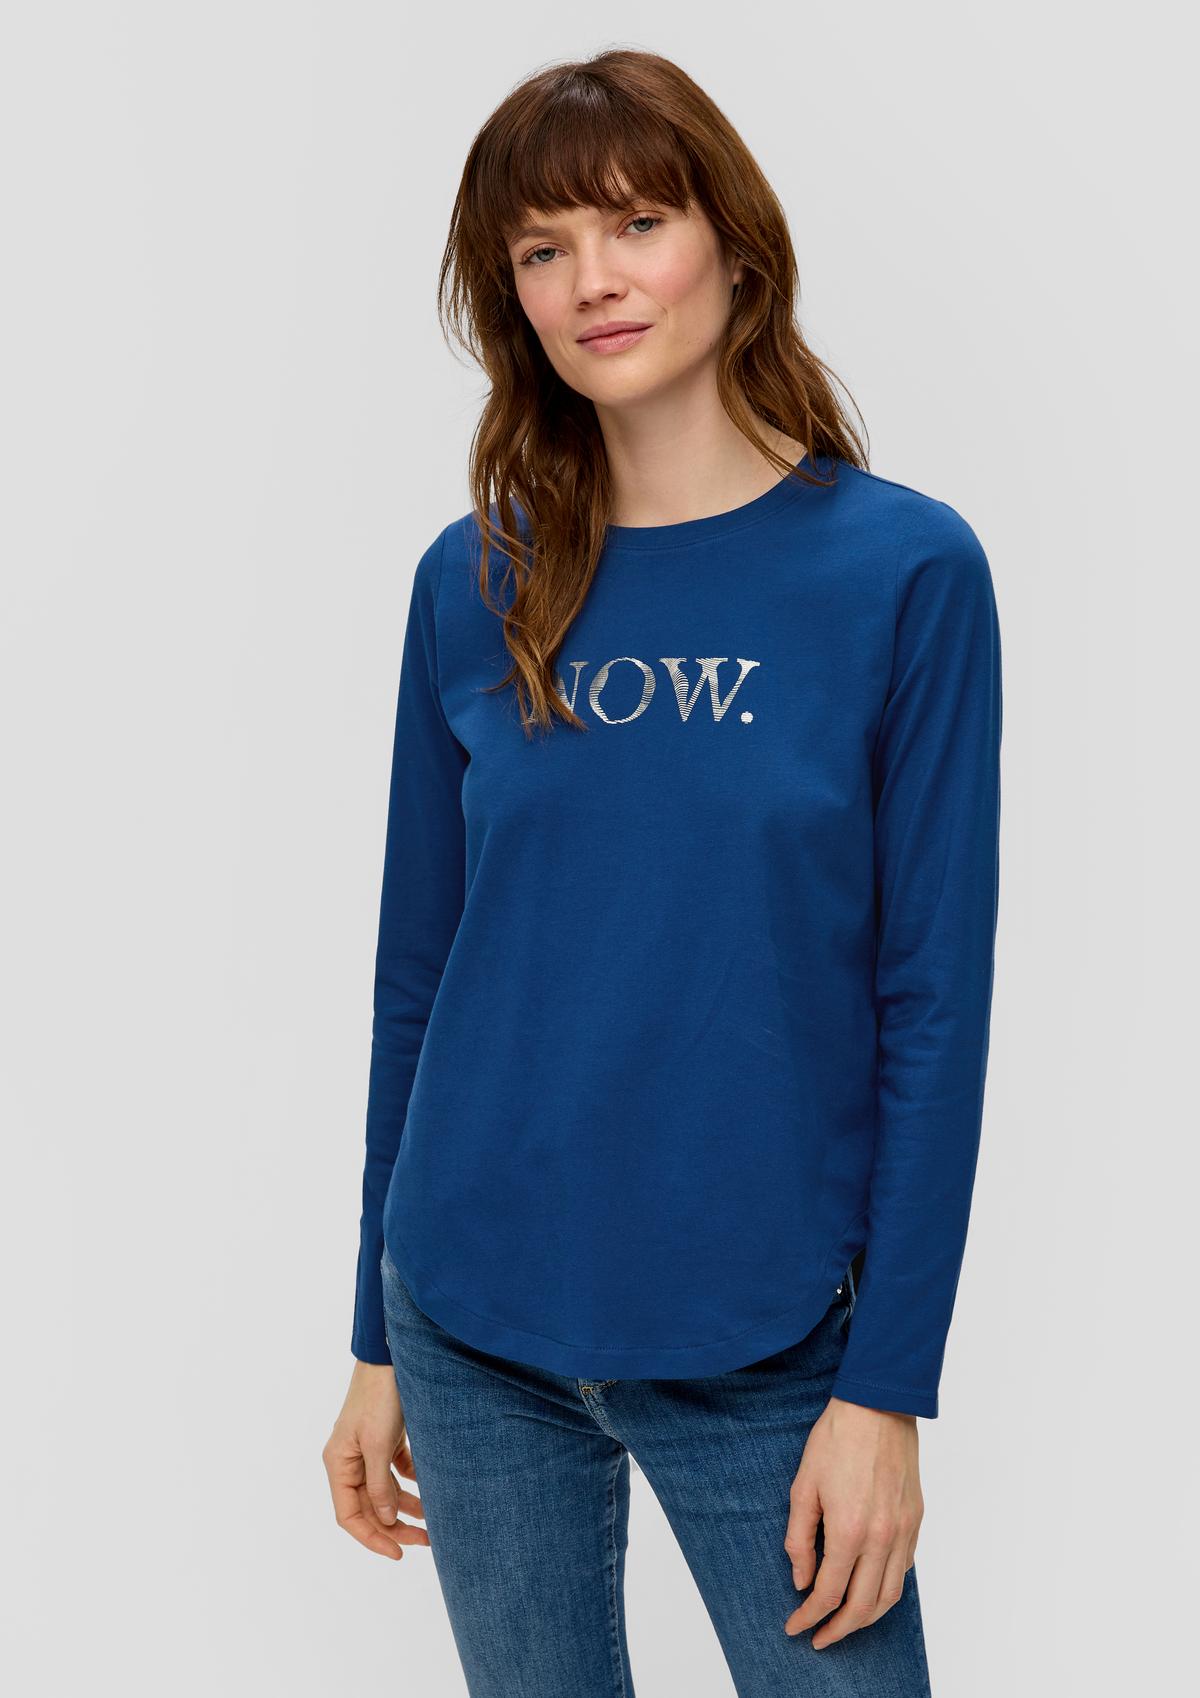 Long Sleeve Tops for Women | V-Shirts